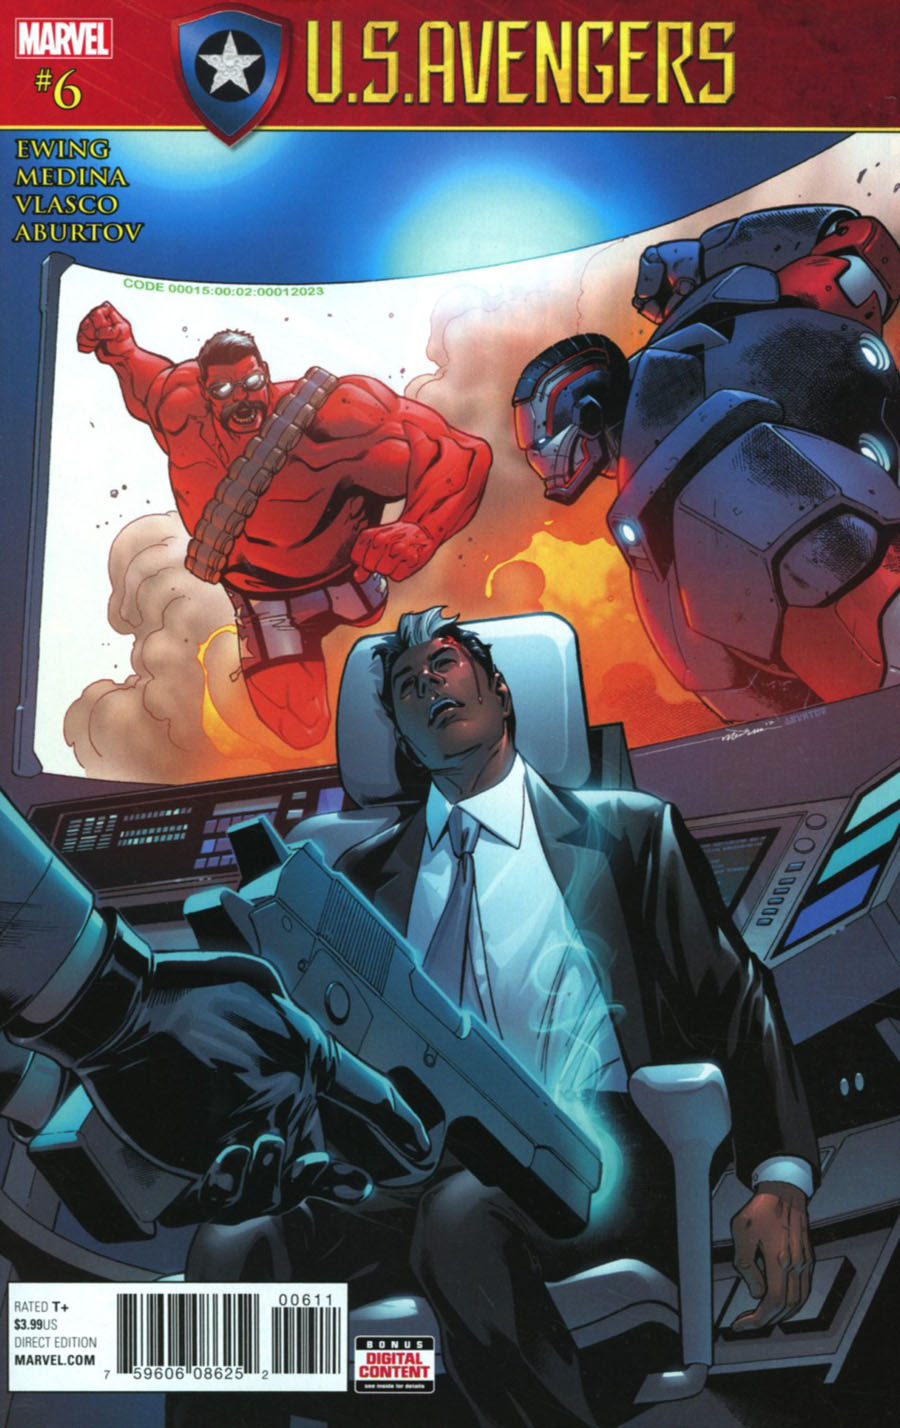 U.S.Avengers #6 (Secret Empire Tie-In)